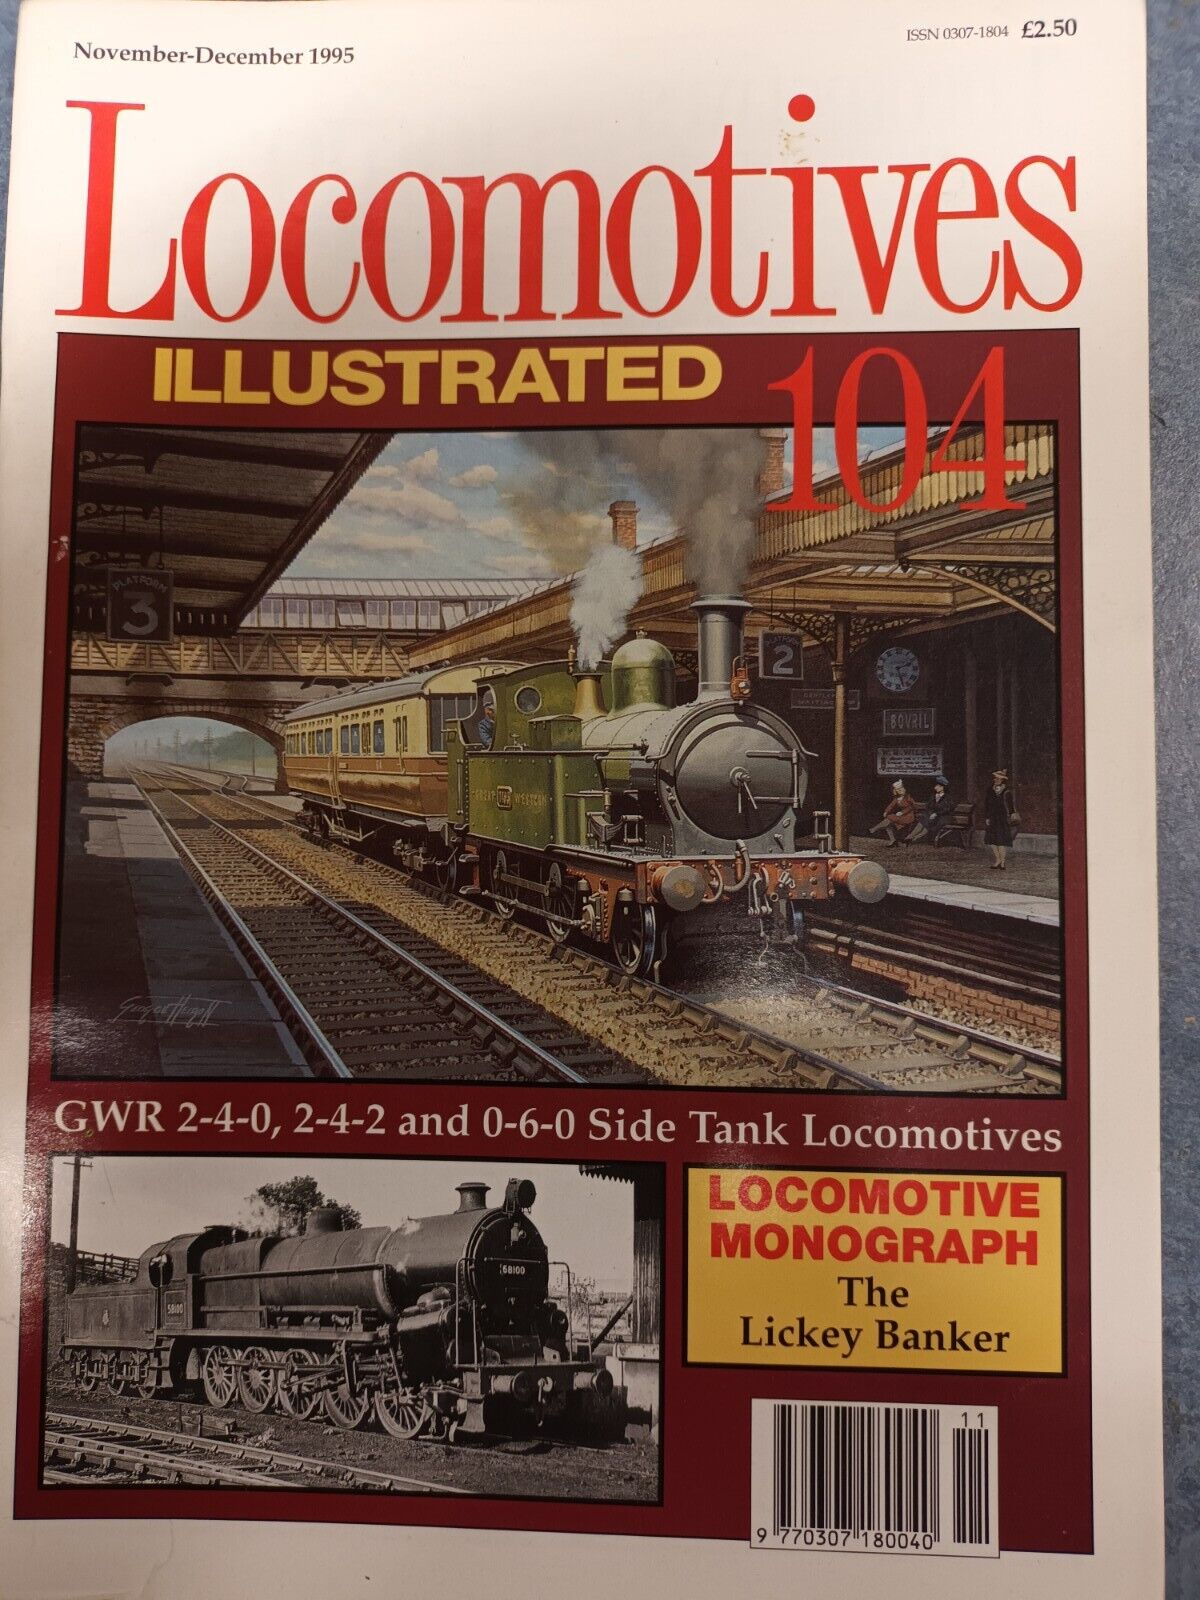 Locomotive Illustrated 104. GWR 2-4-0, 2-4-2 and 0-6-0 Side Tank Locomotives 